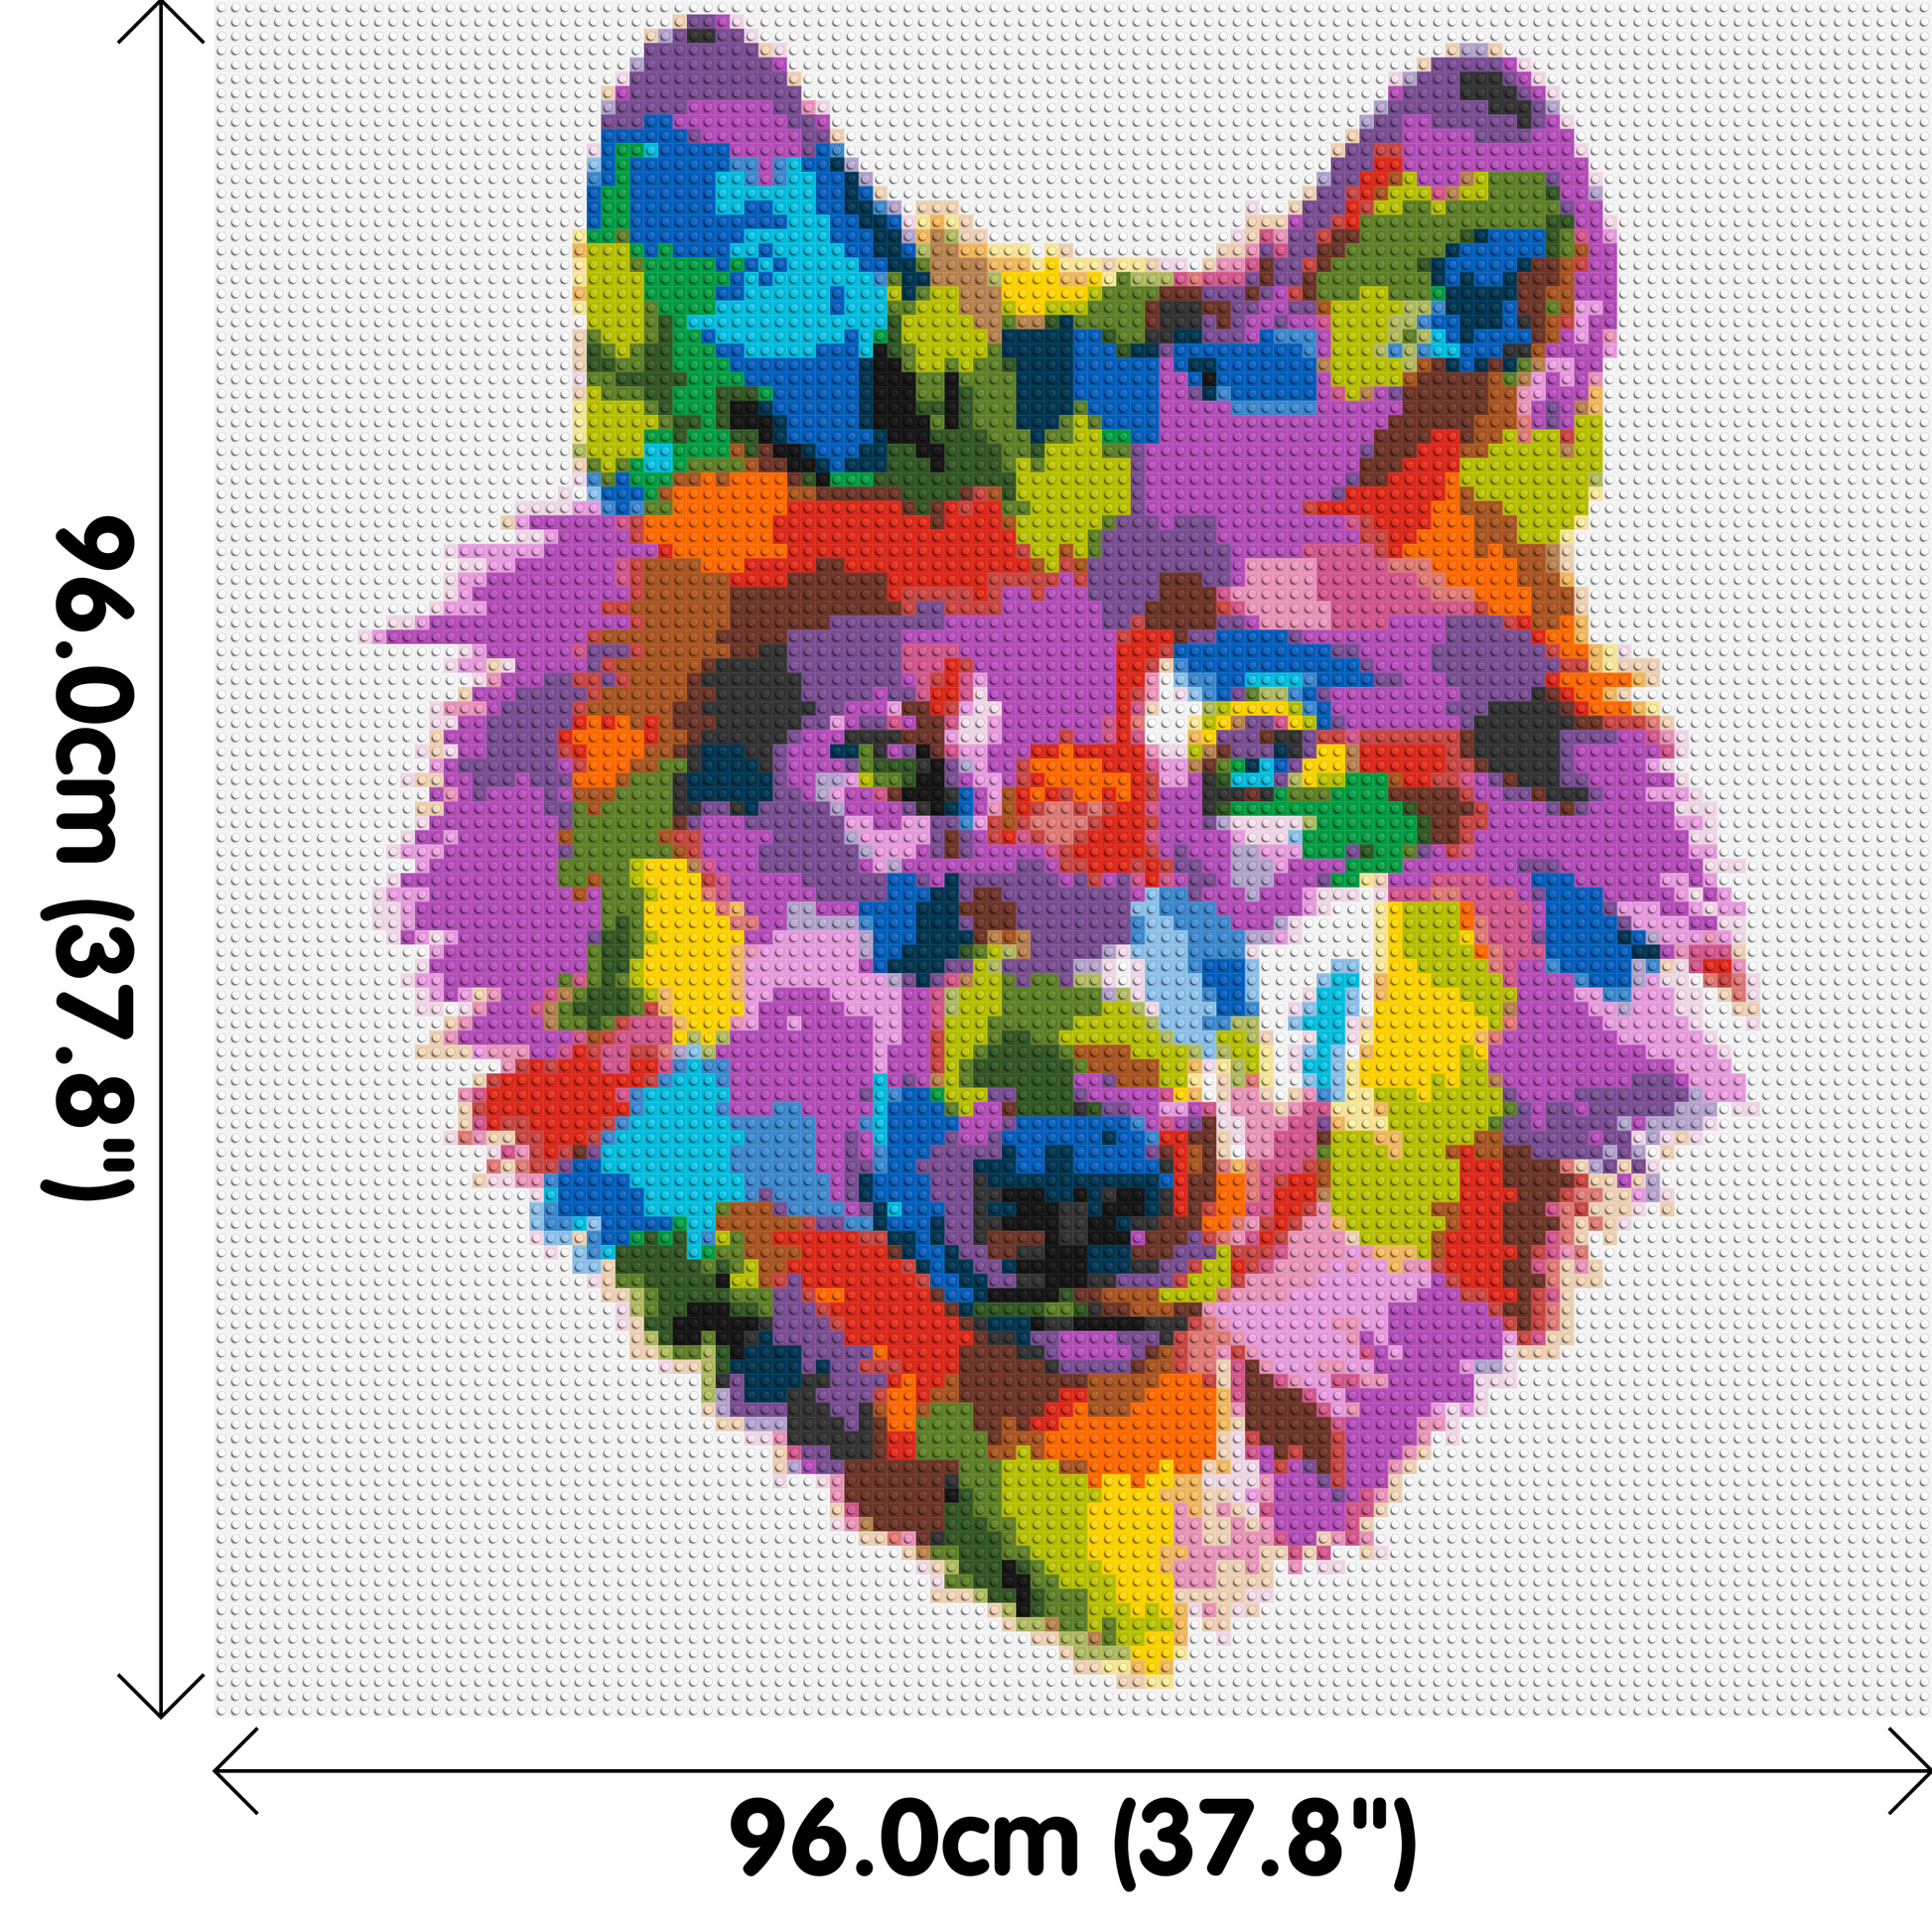 Wolf Colourful Pop Art - Brick Art Mosaic Kit 5x5 dimensions